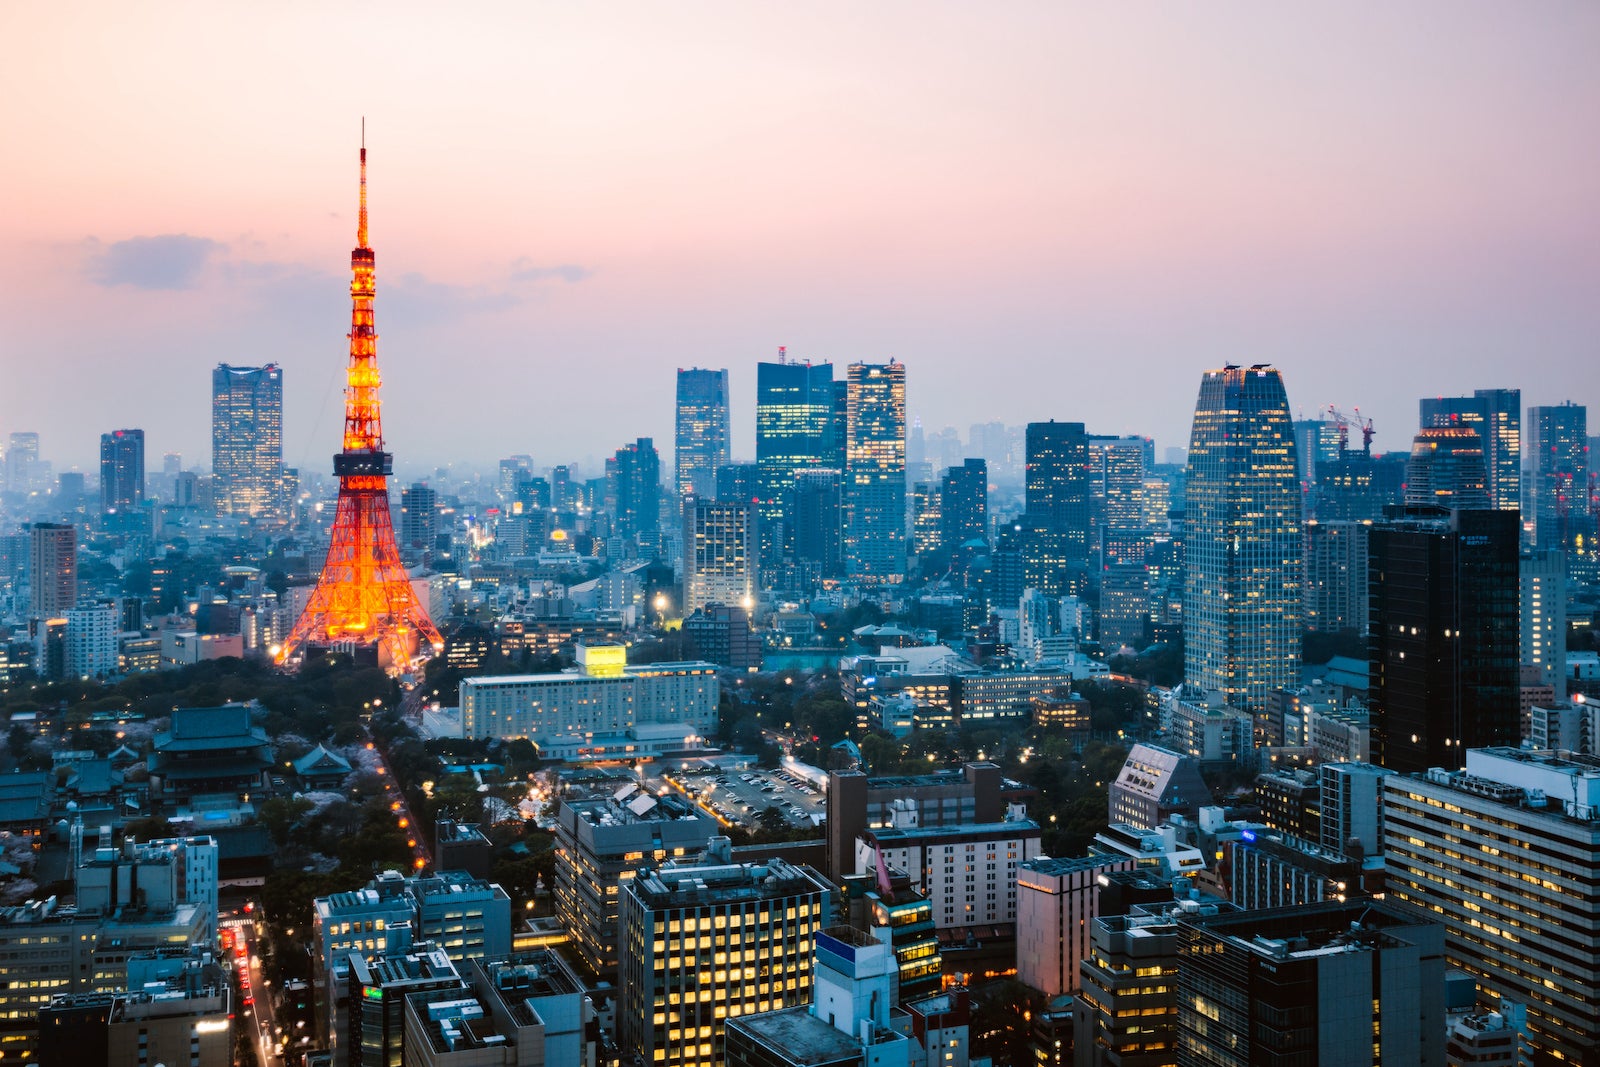 Zipair to offer cheap flights between Tokyo and San Francisco